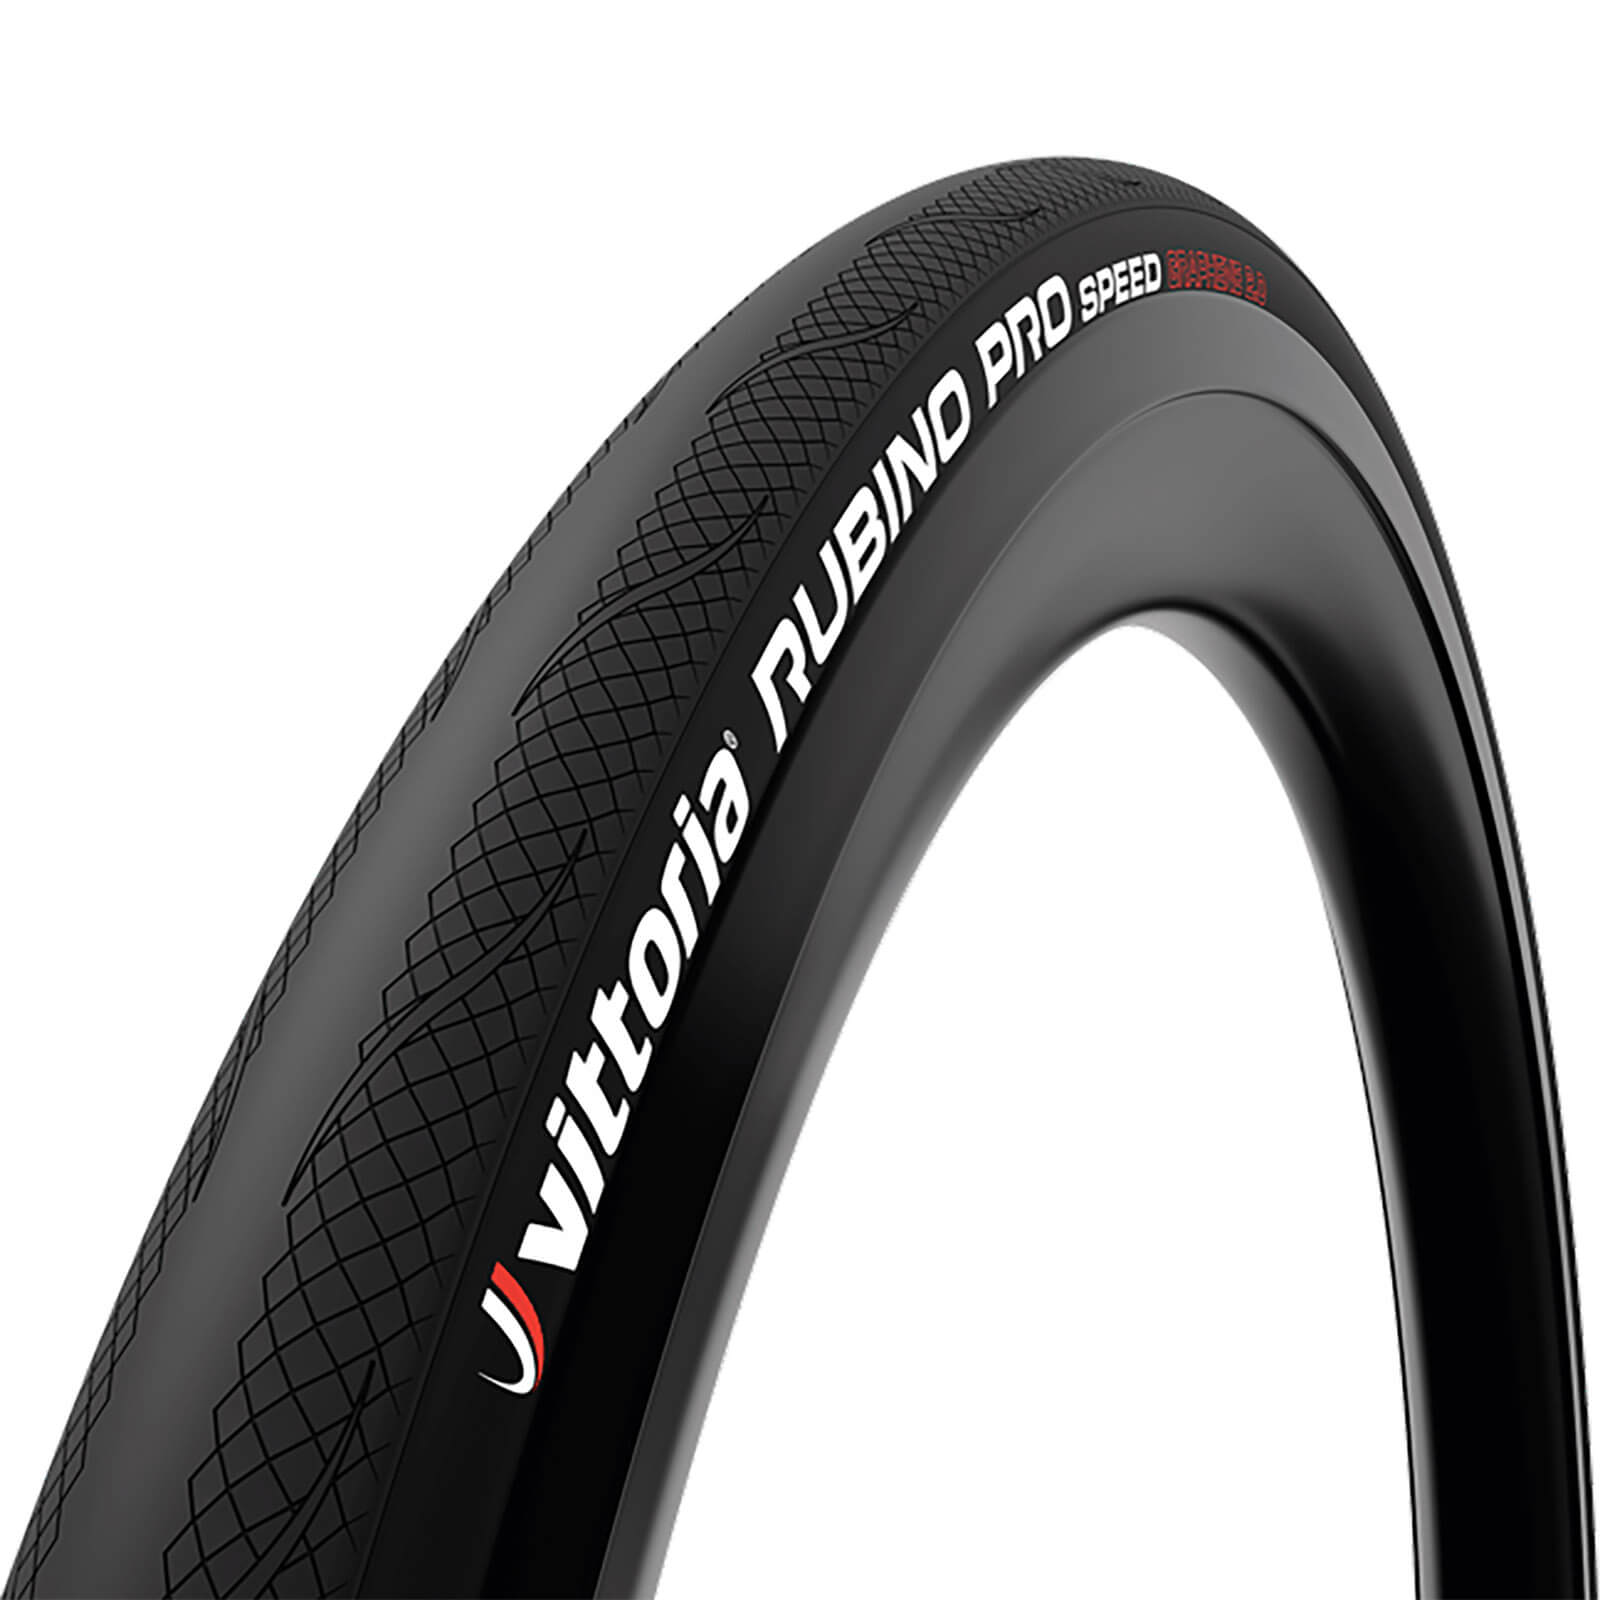 Vittoria Rubino Pro IV Speed Road Tyre - 700x23mm